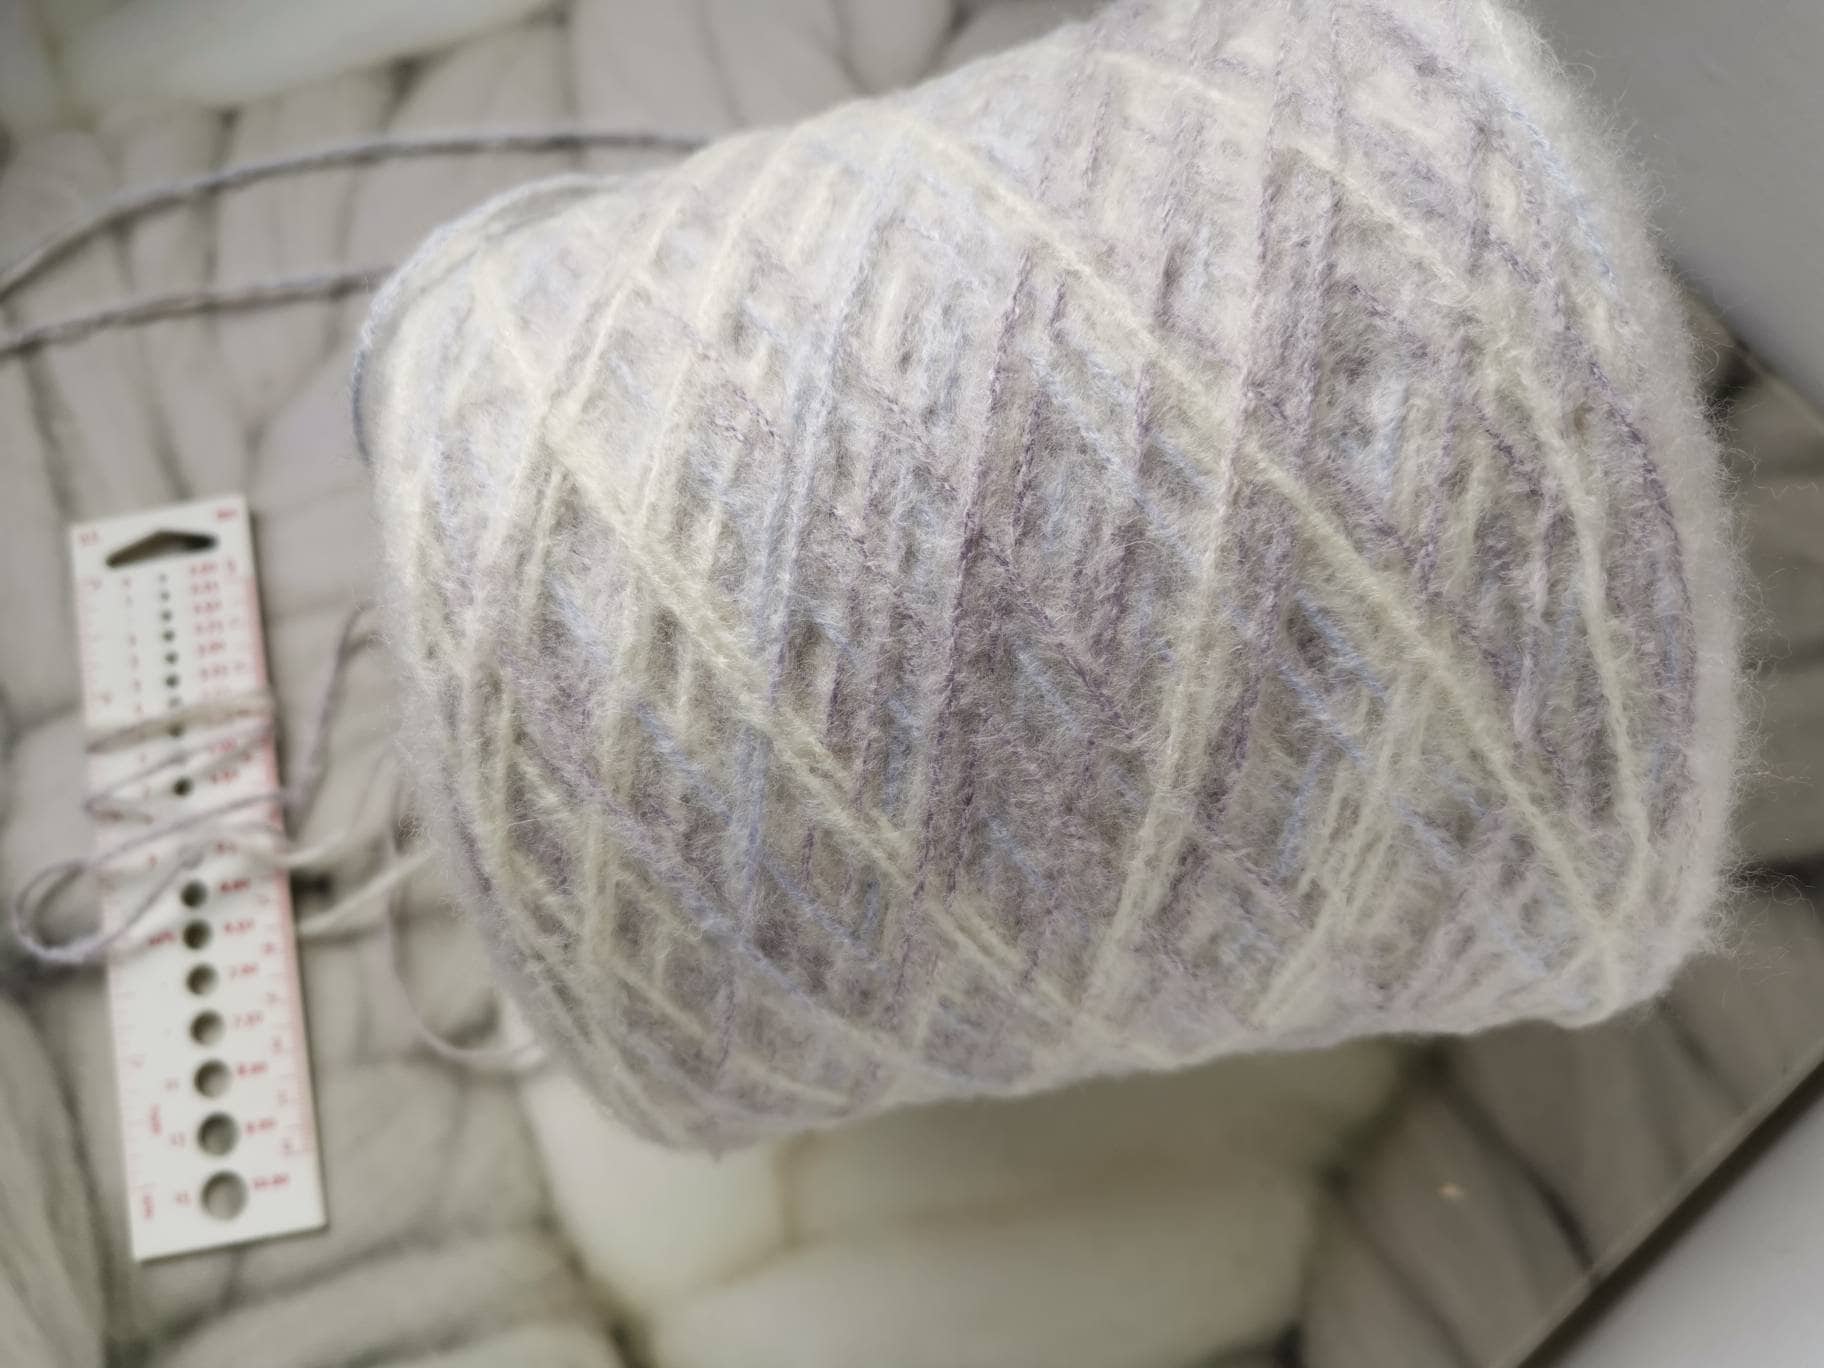 Silk/cotton Yarn on Cone, Hand Knitting, Crocheting, Machine